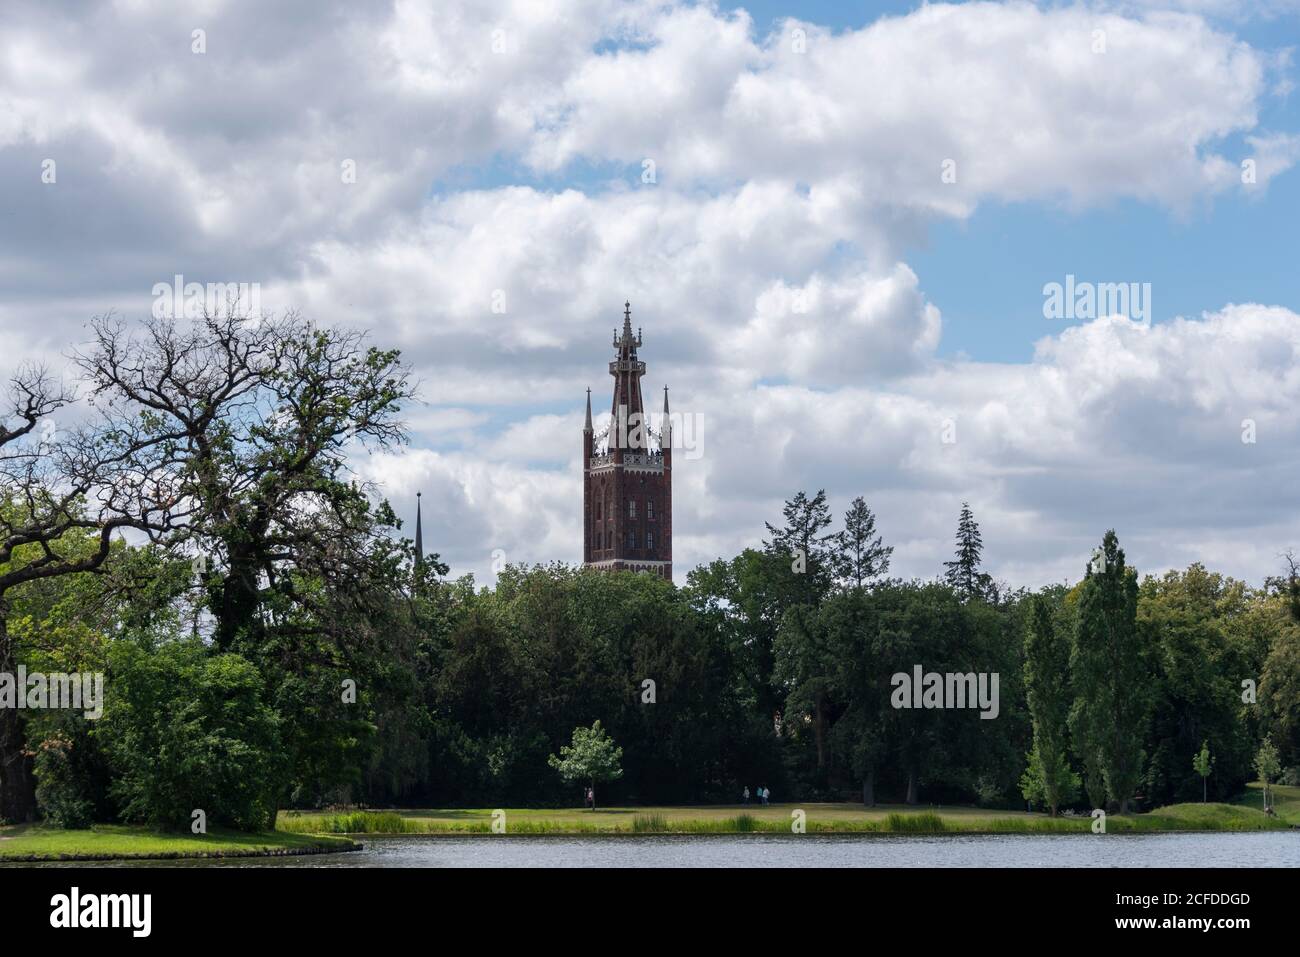 Germany, Saxony-Anhalt, Wörlitz, view of the Wörlitz Garden Realm with Biblical Tower, Unesco World Heritage. Stock Photo